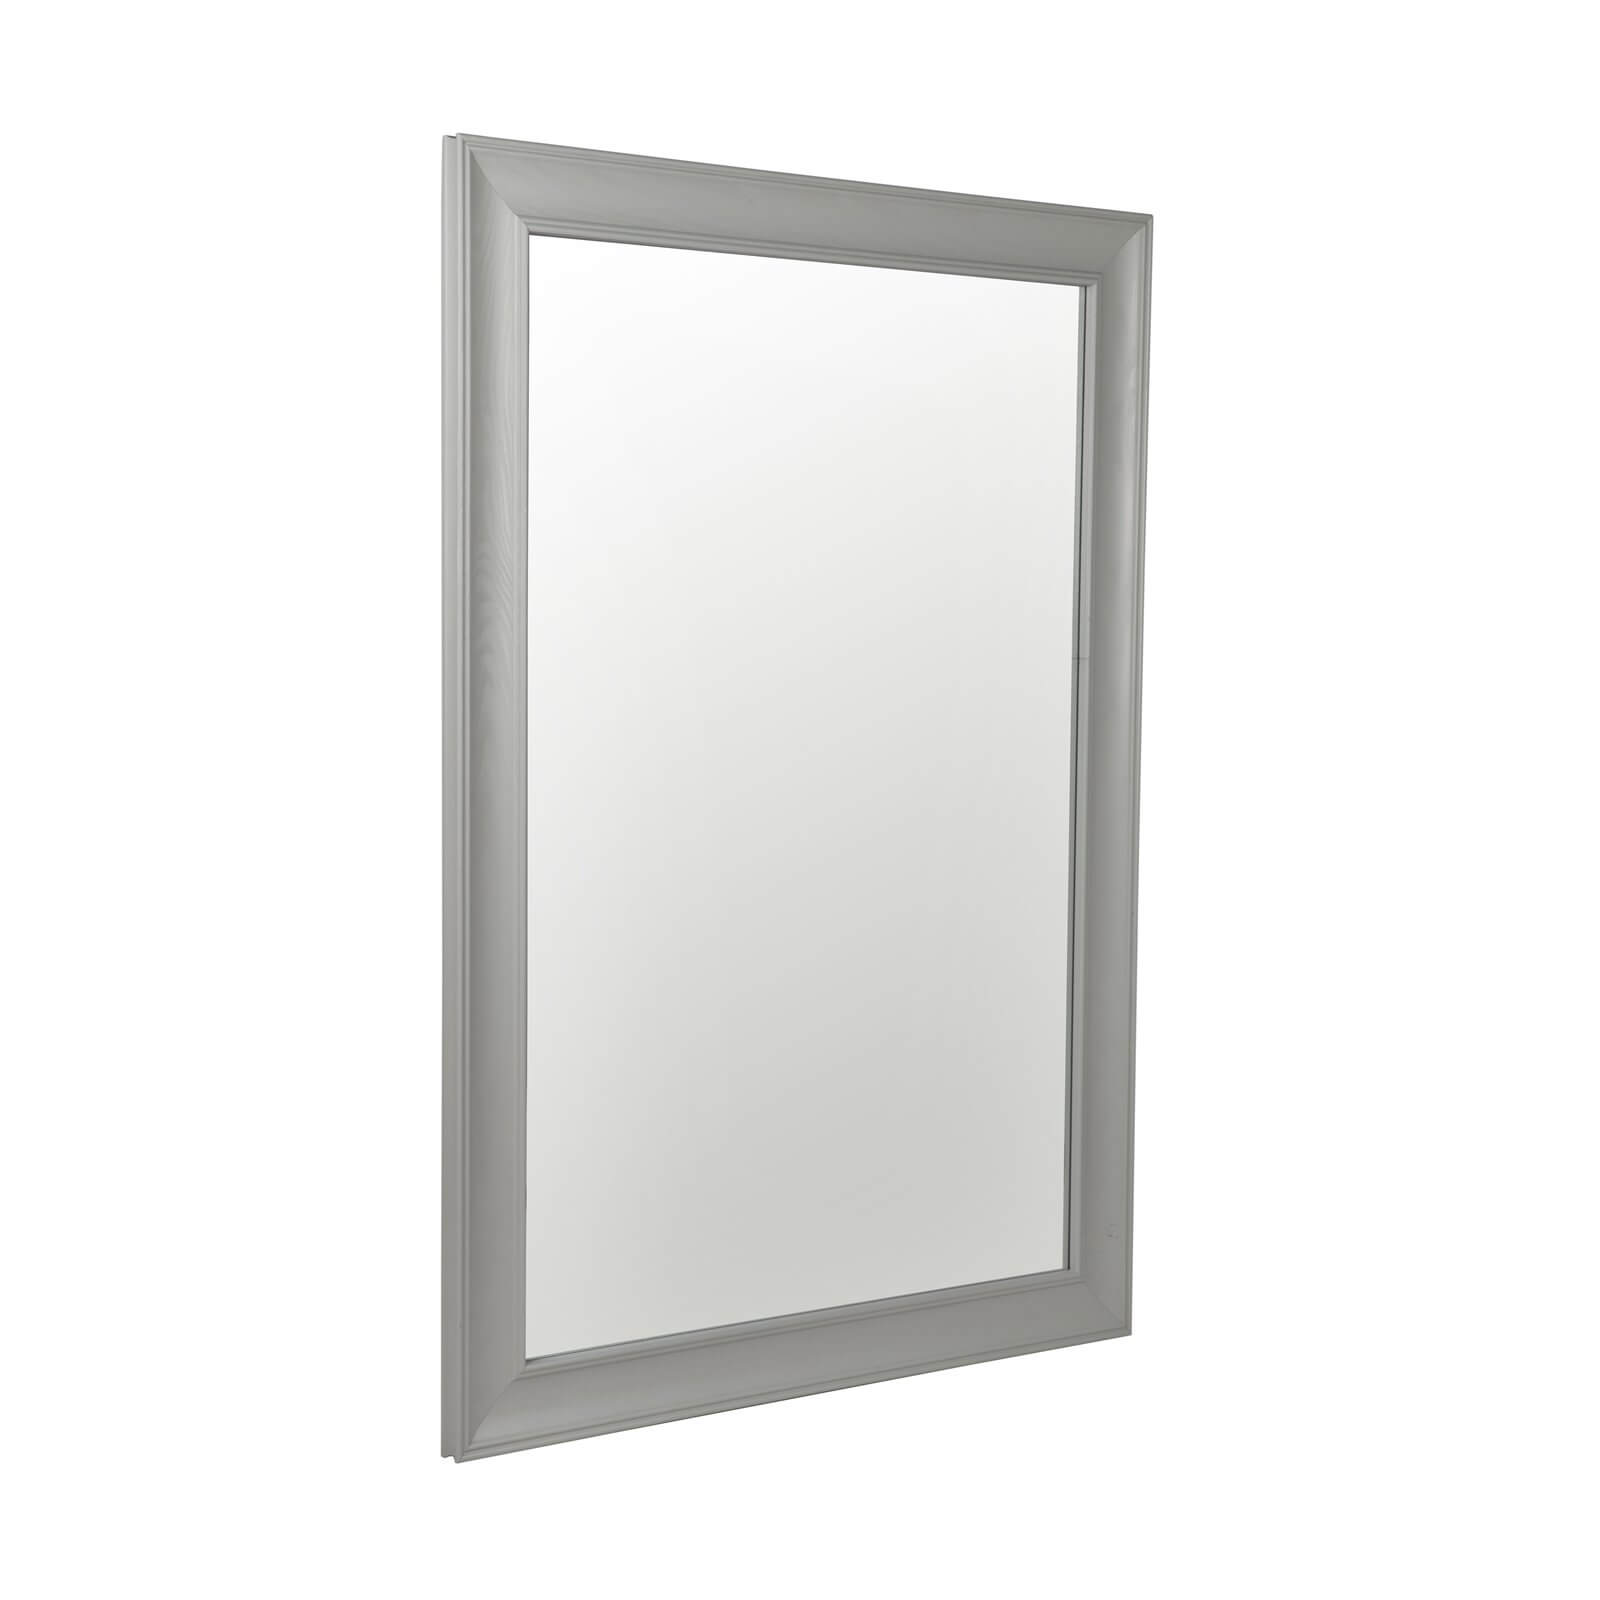 Coldrake Framed Mirror Grey Wood 61x86cm